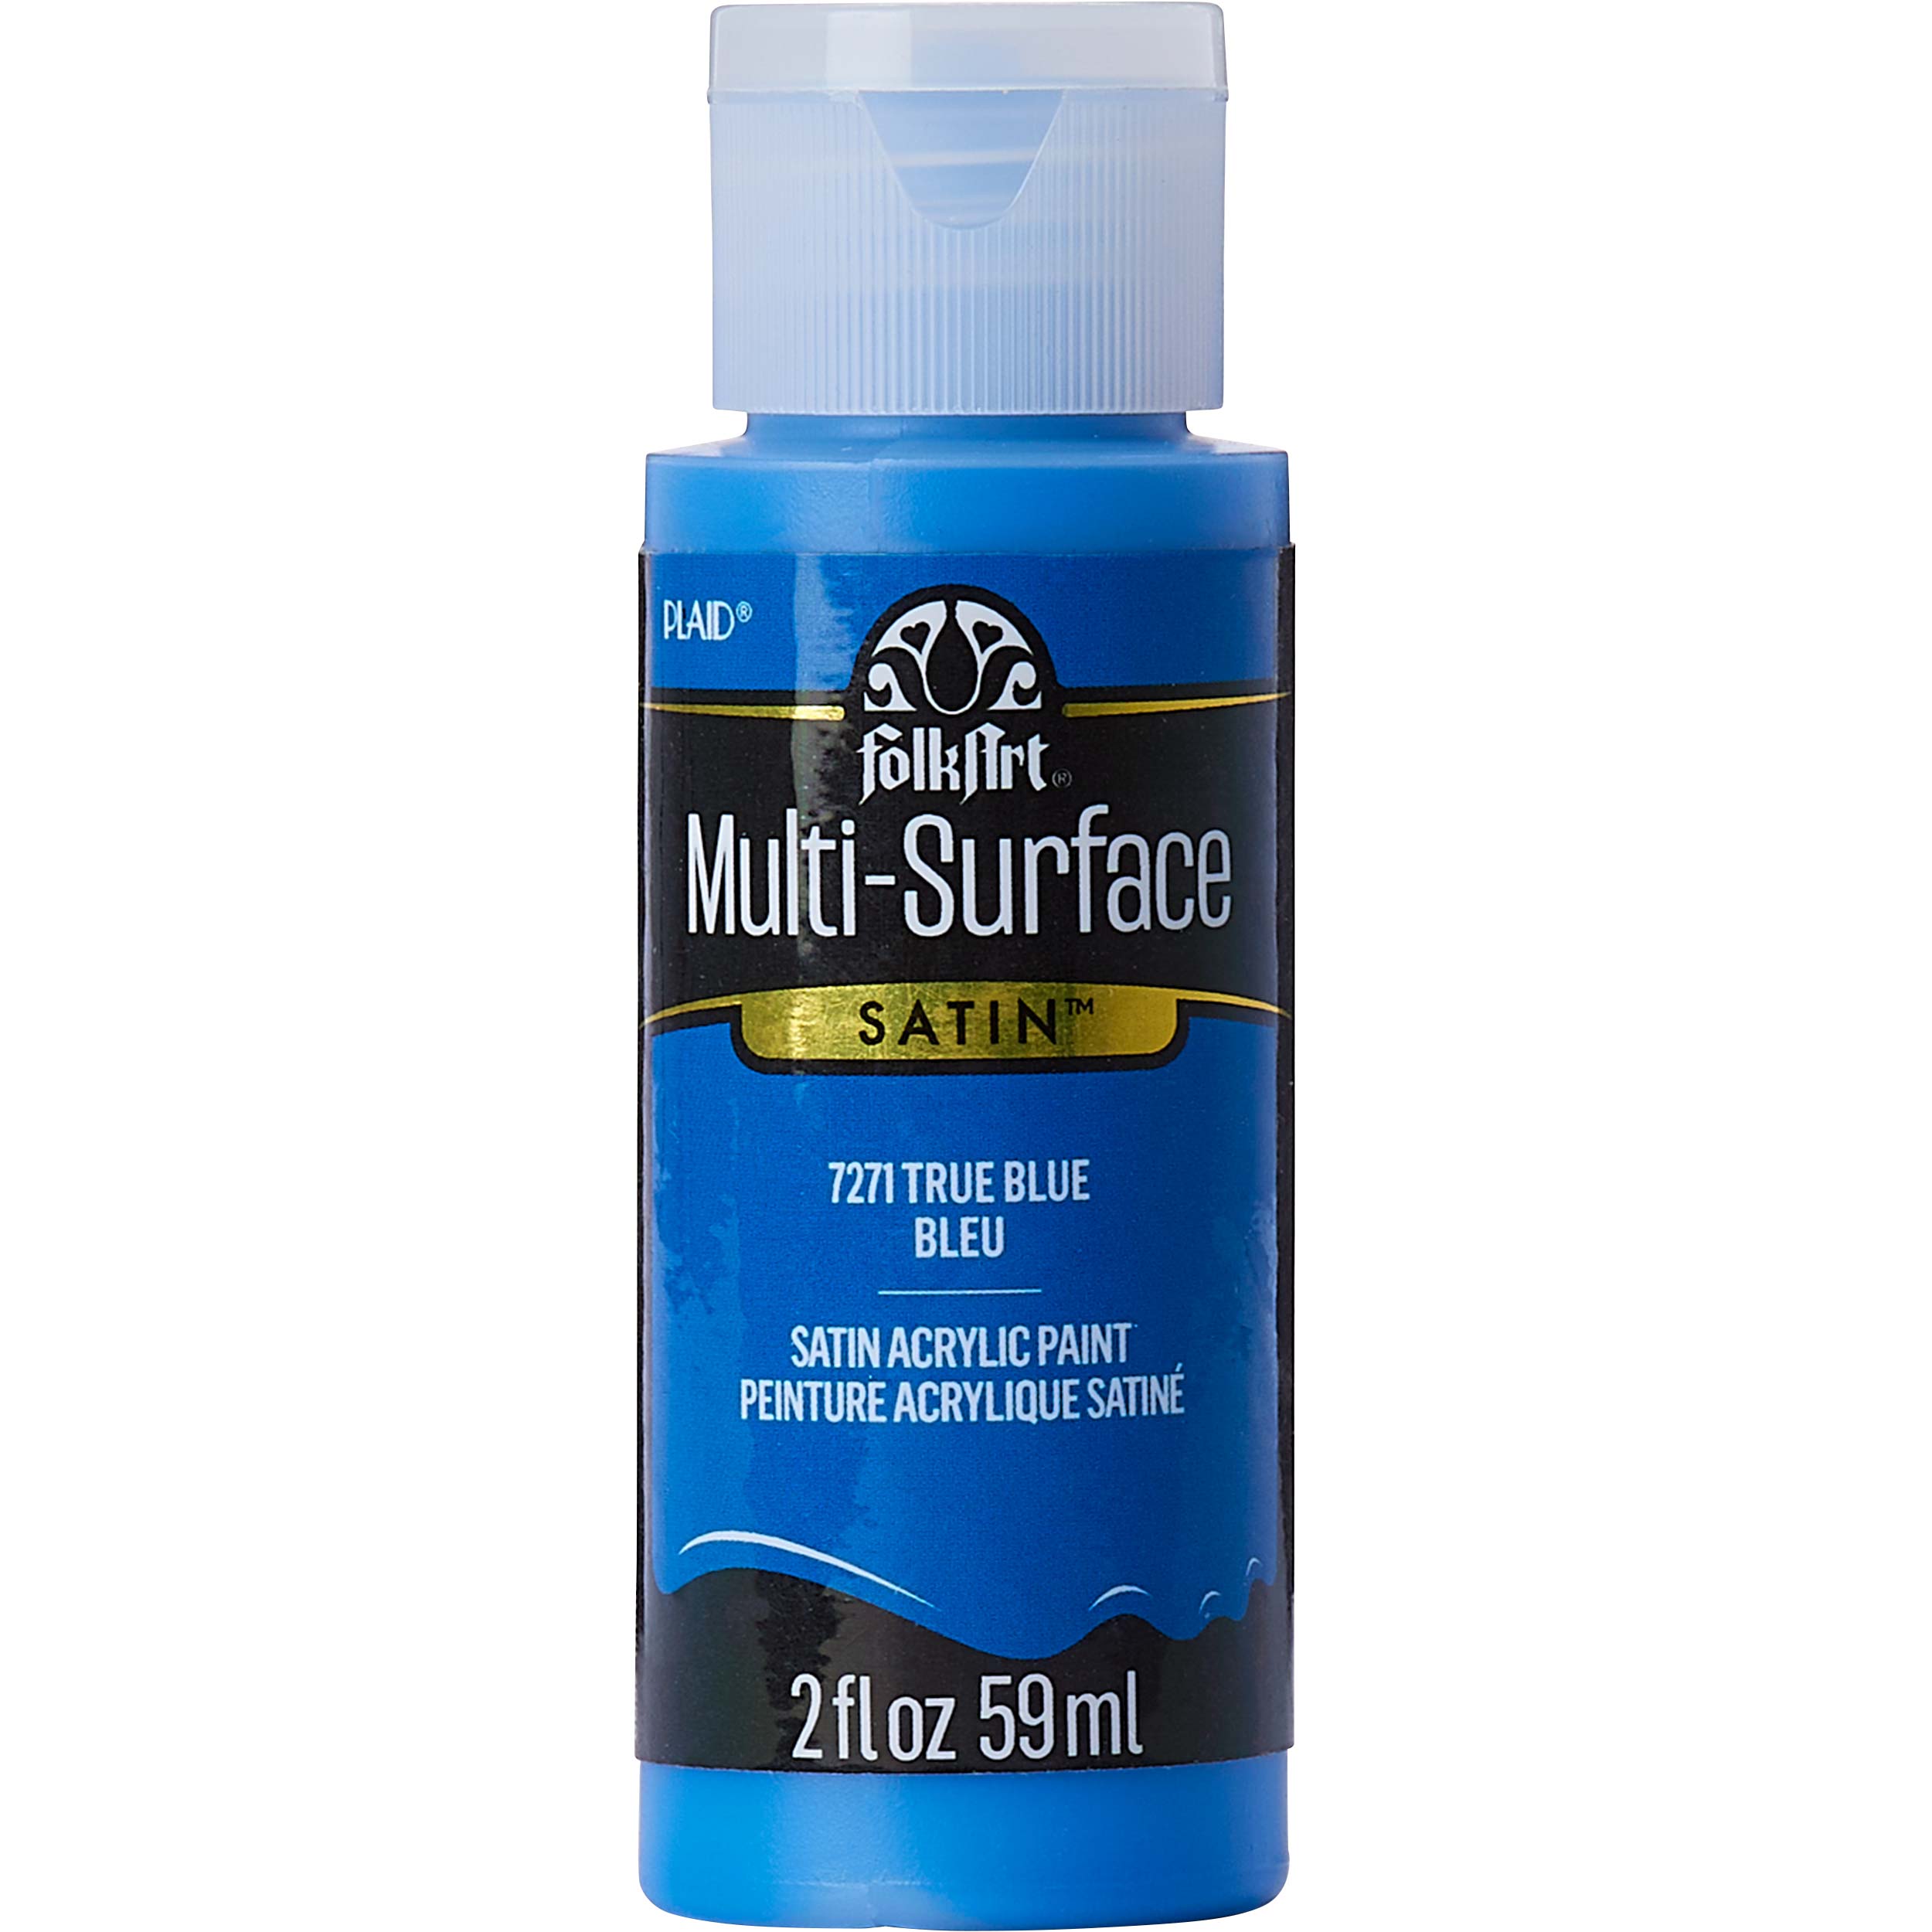 FolkArt ® Multi-Surface Satin Acrylic Paints - True Blue, 2 oz. - 7271